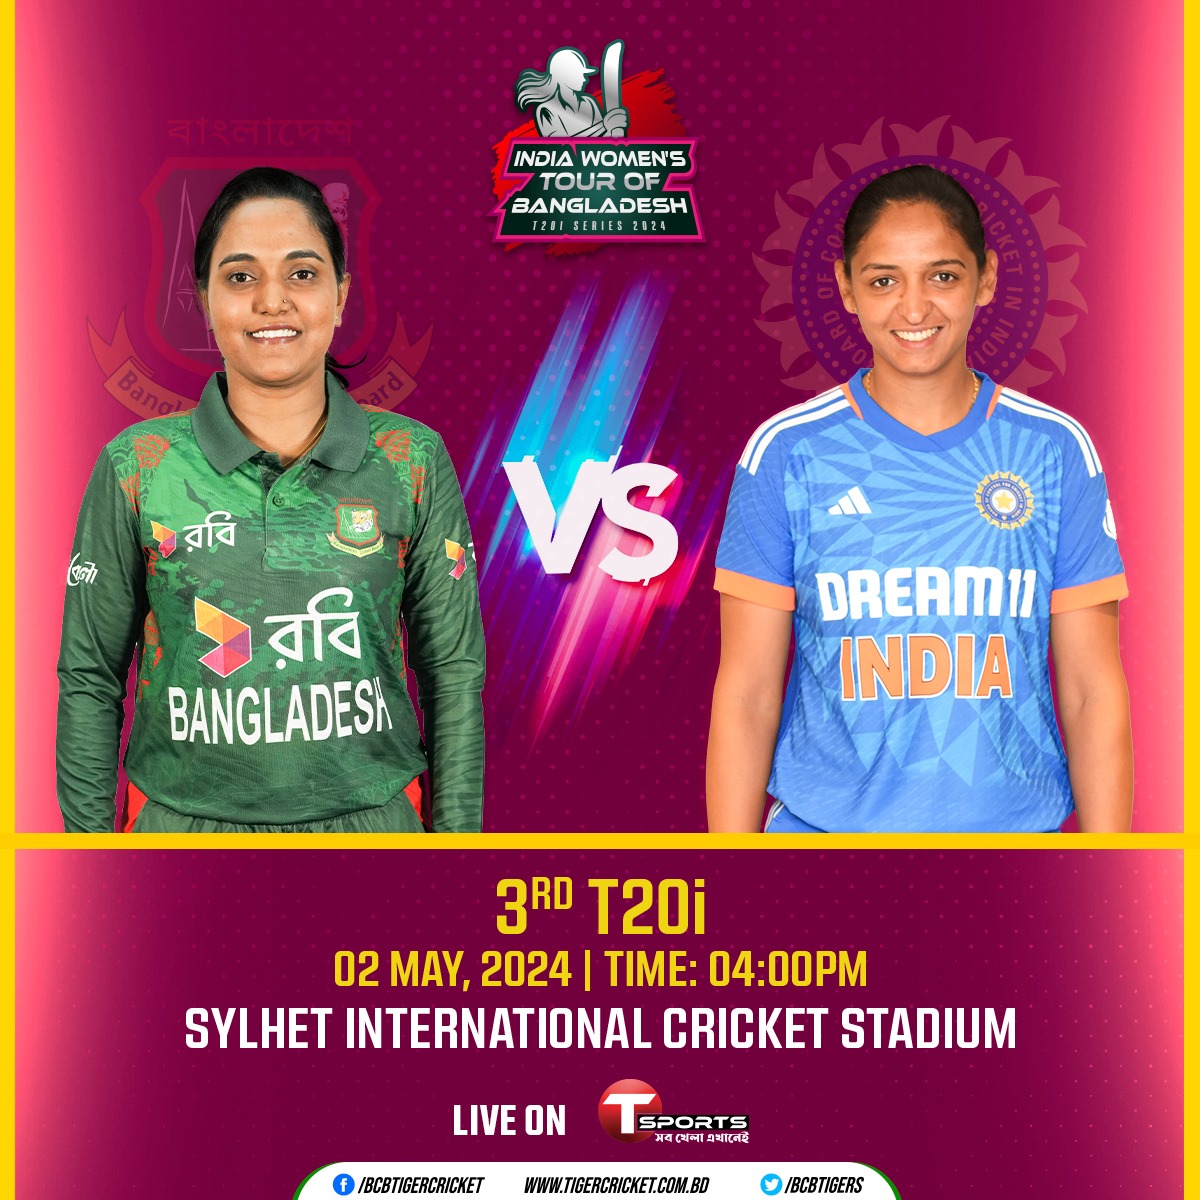 India Women’s Team Tour of Bangladesh 2024
Bangladesh vs India | 3rd T20i | 2 May 2024 | Time: 04:00 pm

Details 👉: tigercricket.com.bd/live-score/ind…

#BCB #Cricket #BANWvINDW #LiveCircket #HomeSeries #T20Iseries #womenscricket